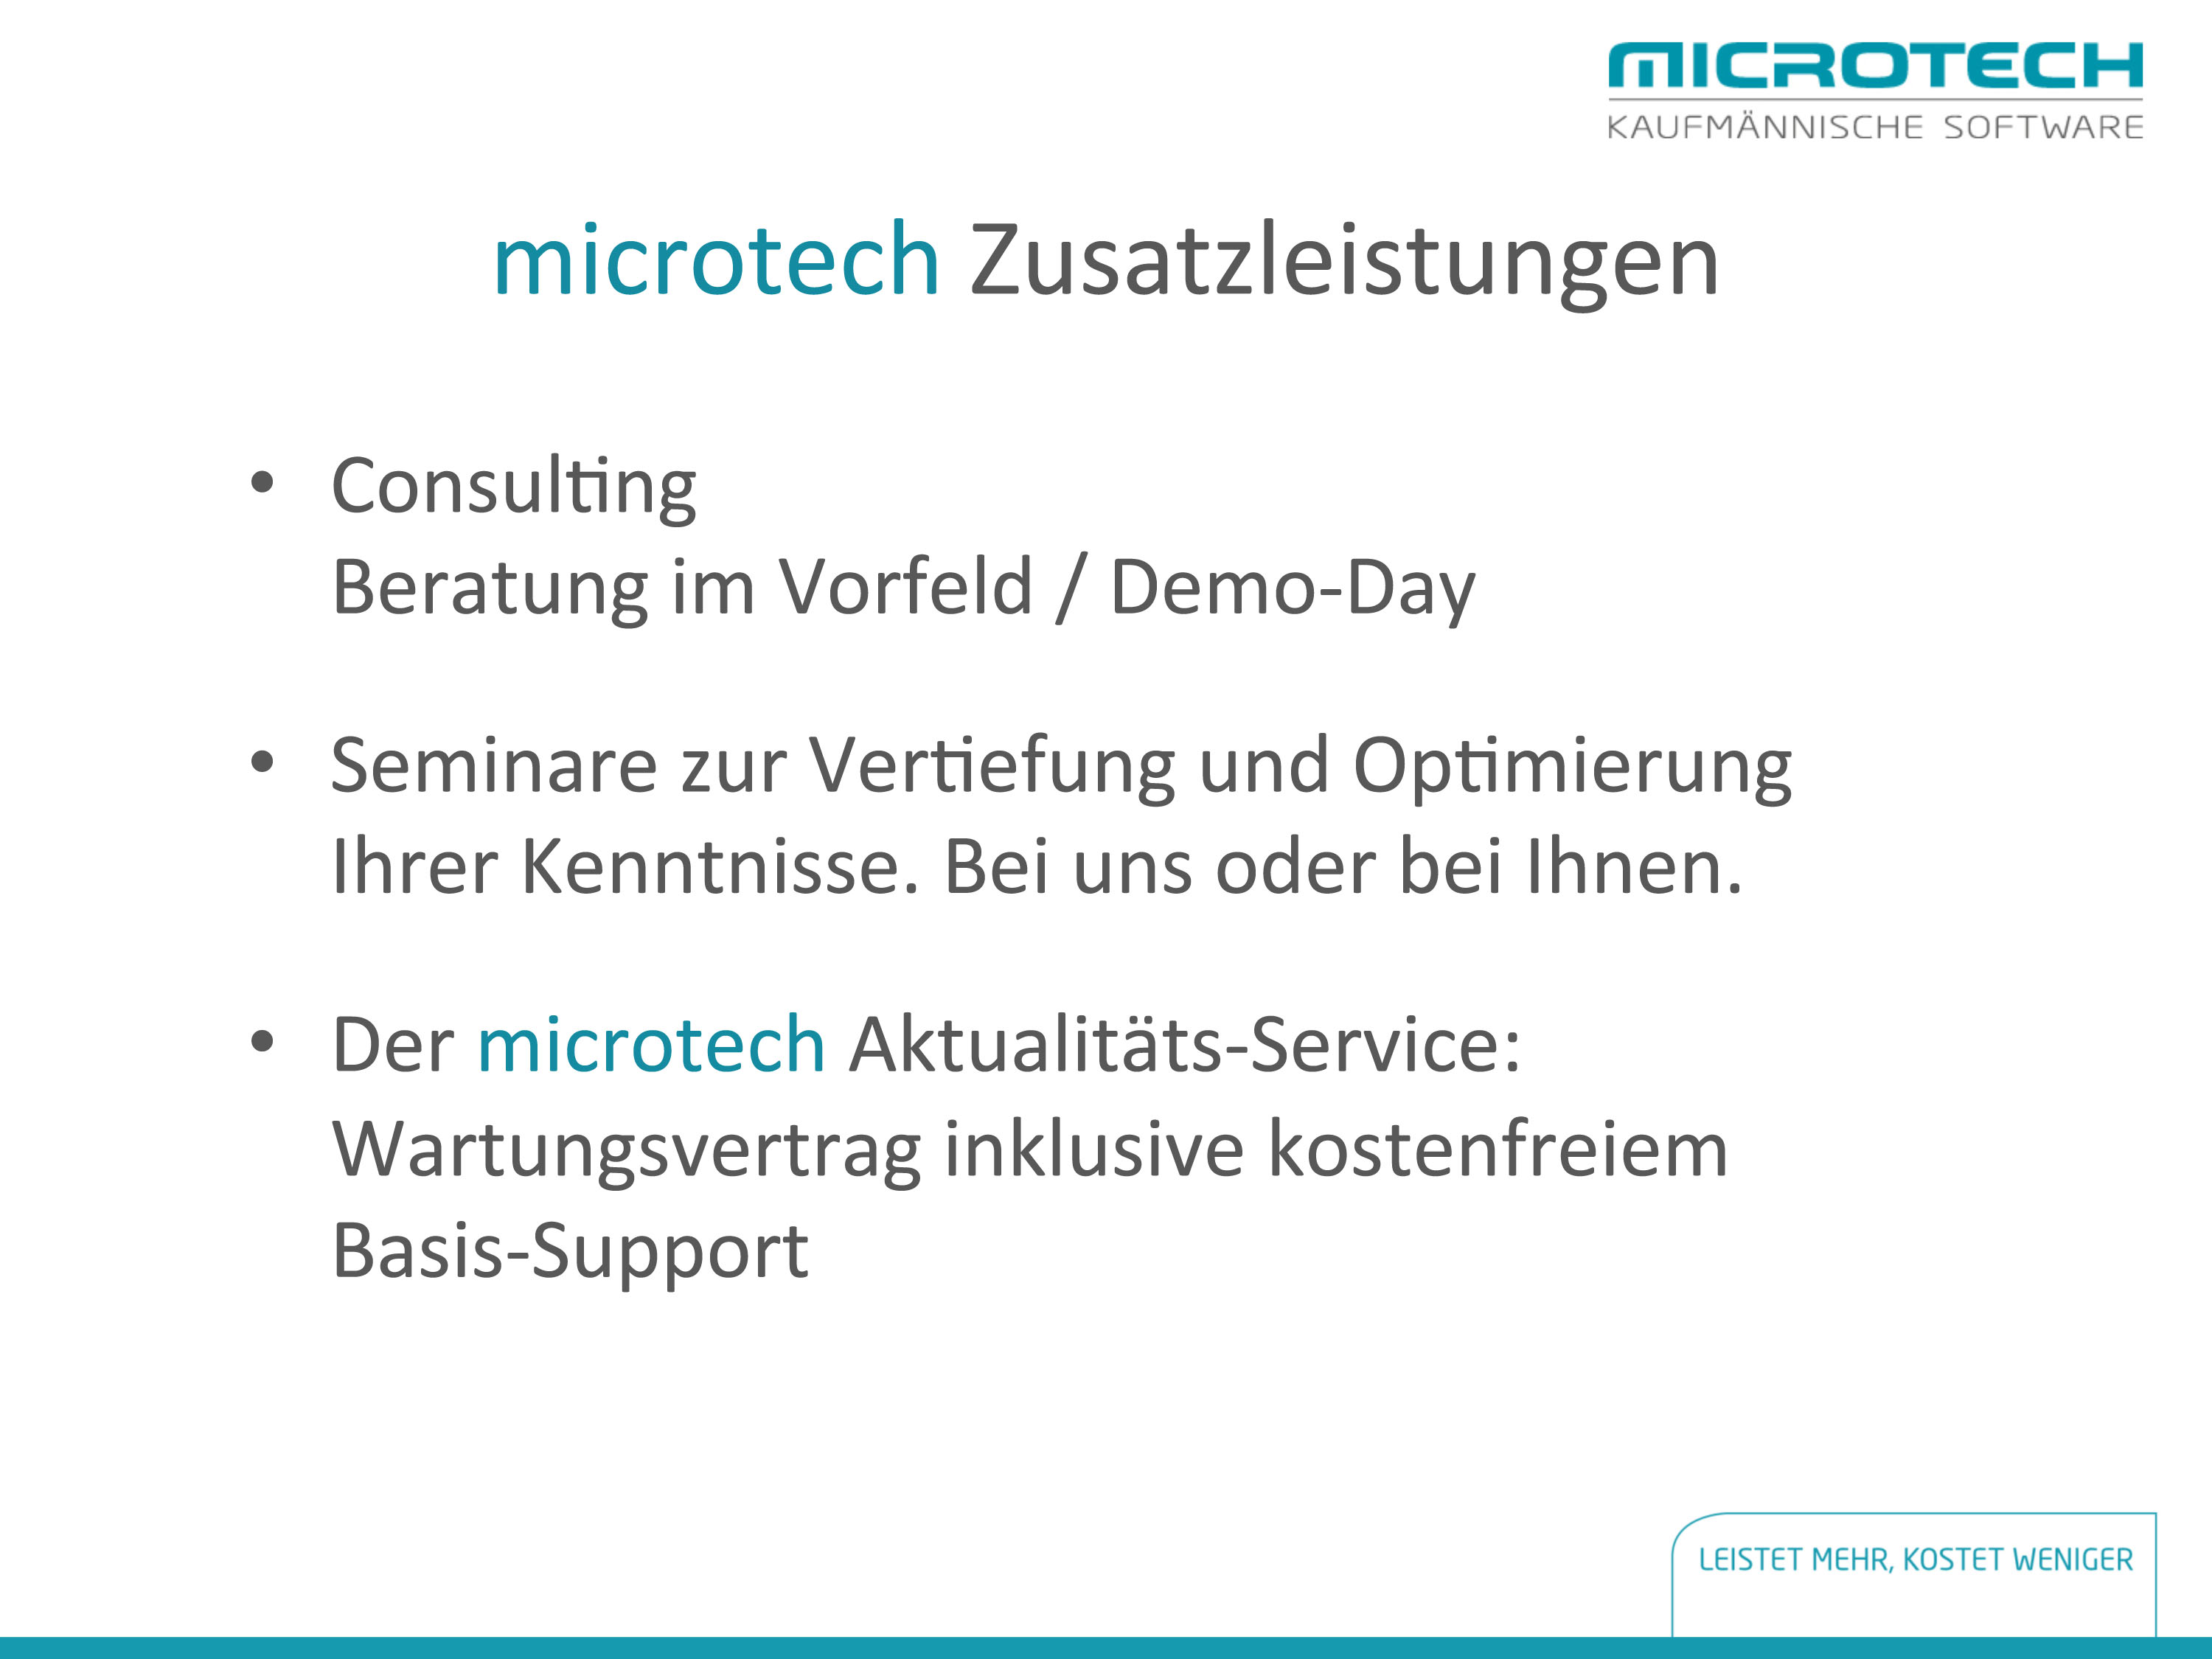 Microtech-9.jpg